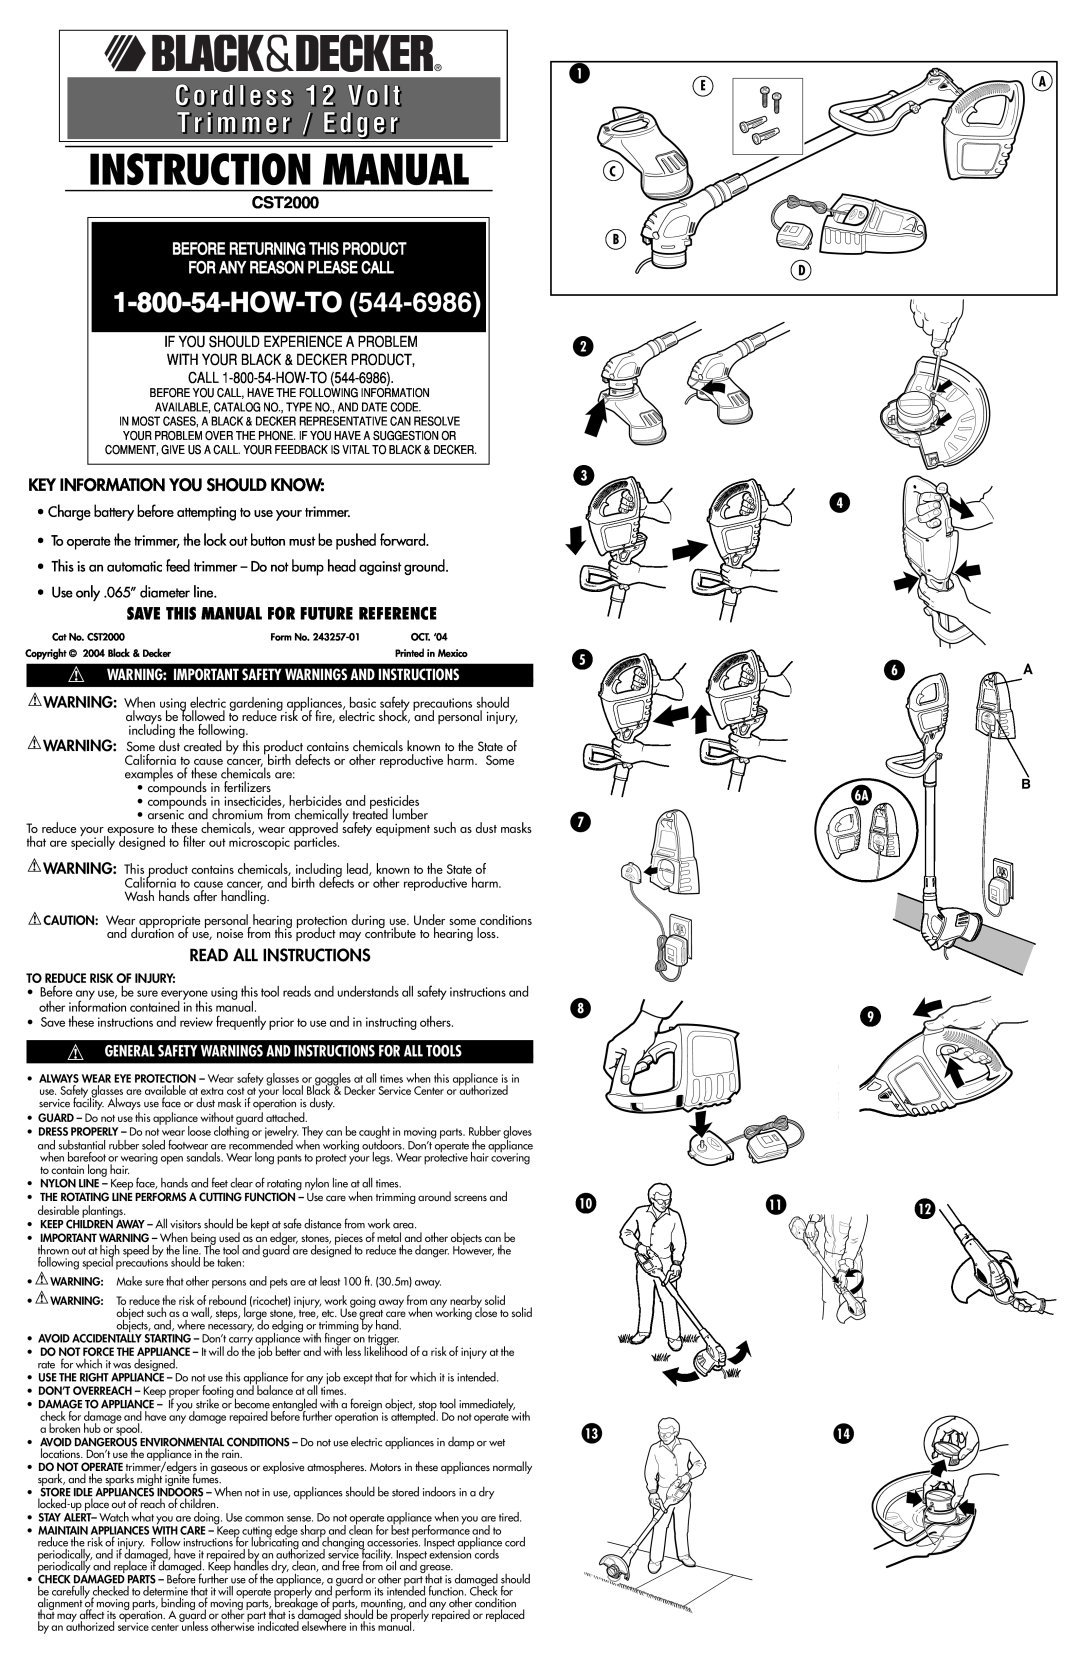 Black & Decker 243257-01 instruction manual Cordless 12 Volt Trimmer / Edger, CST2000, Key Information You Should Know 